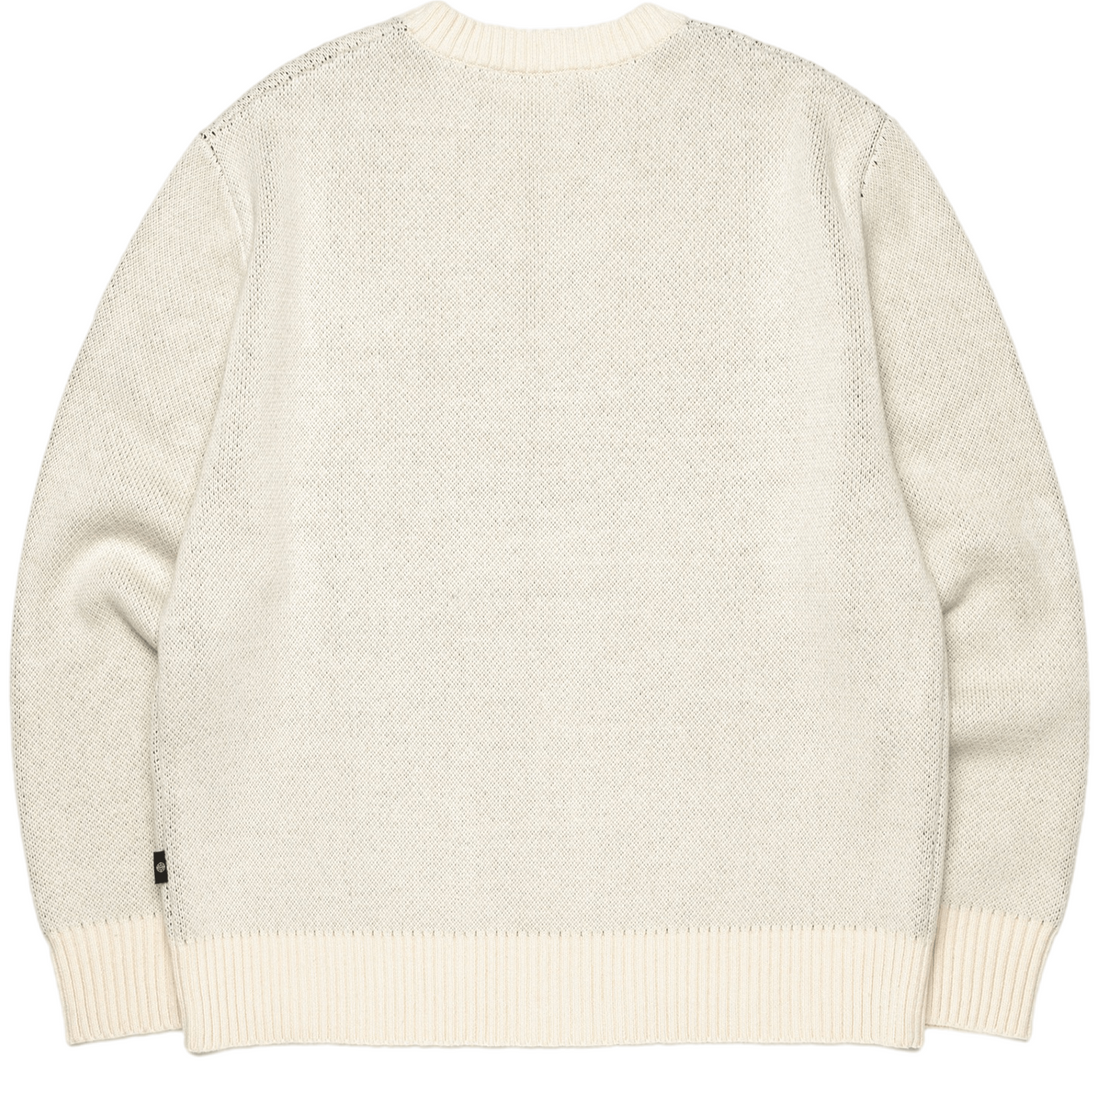 Scarface Mafia 90s Aesthetic Knit White Sweater